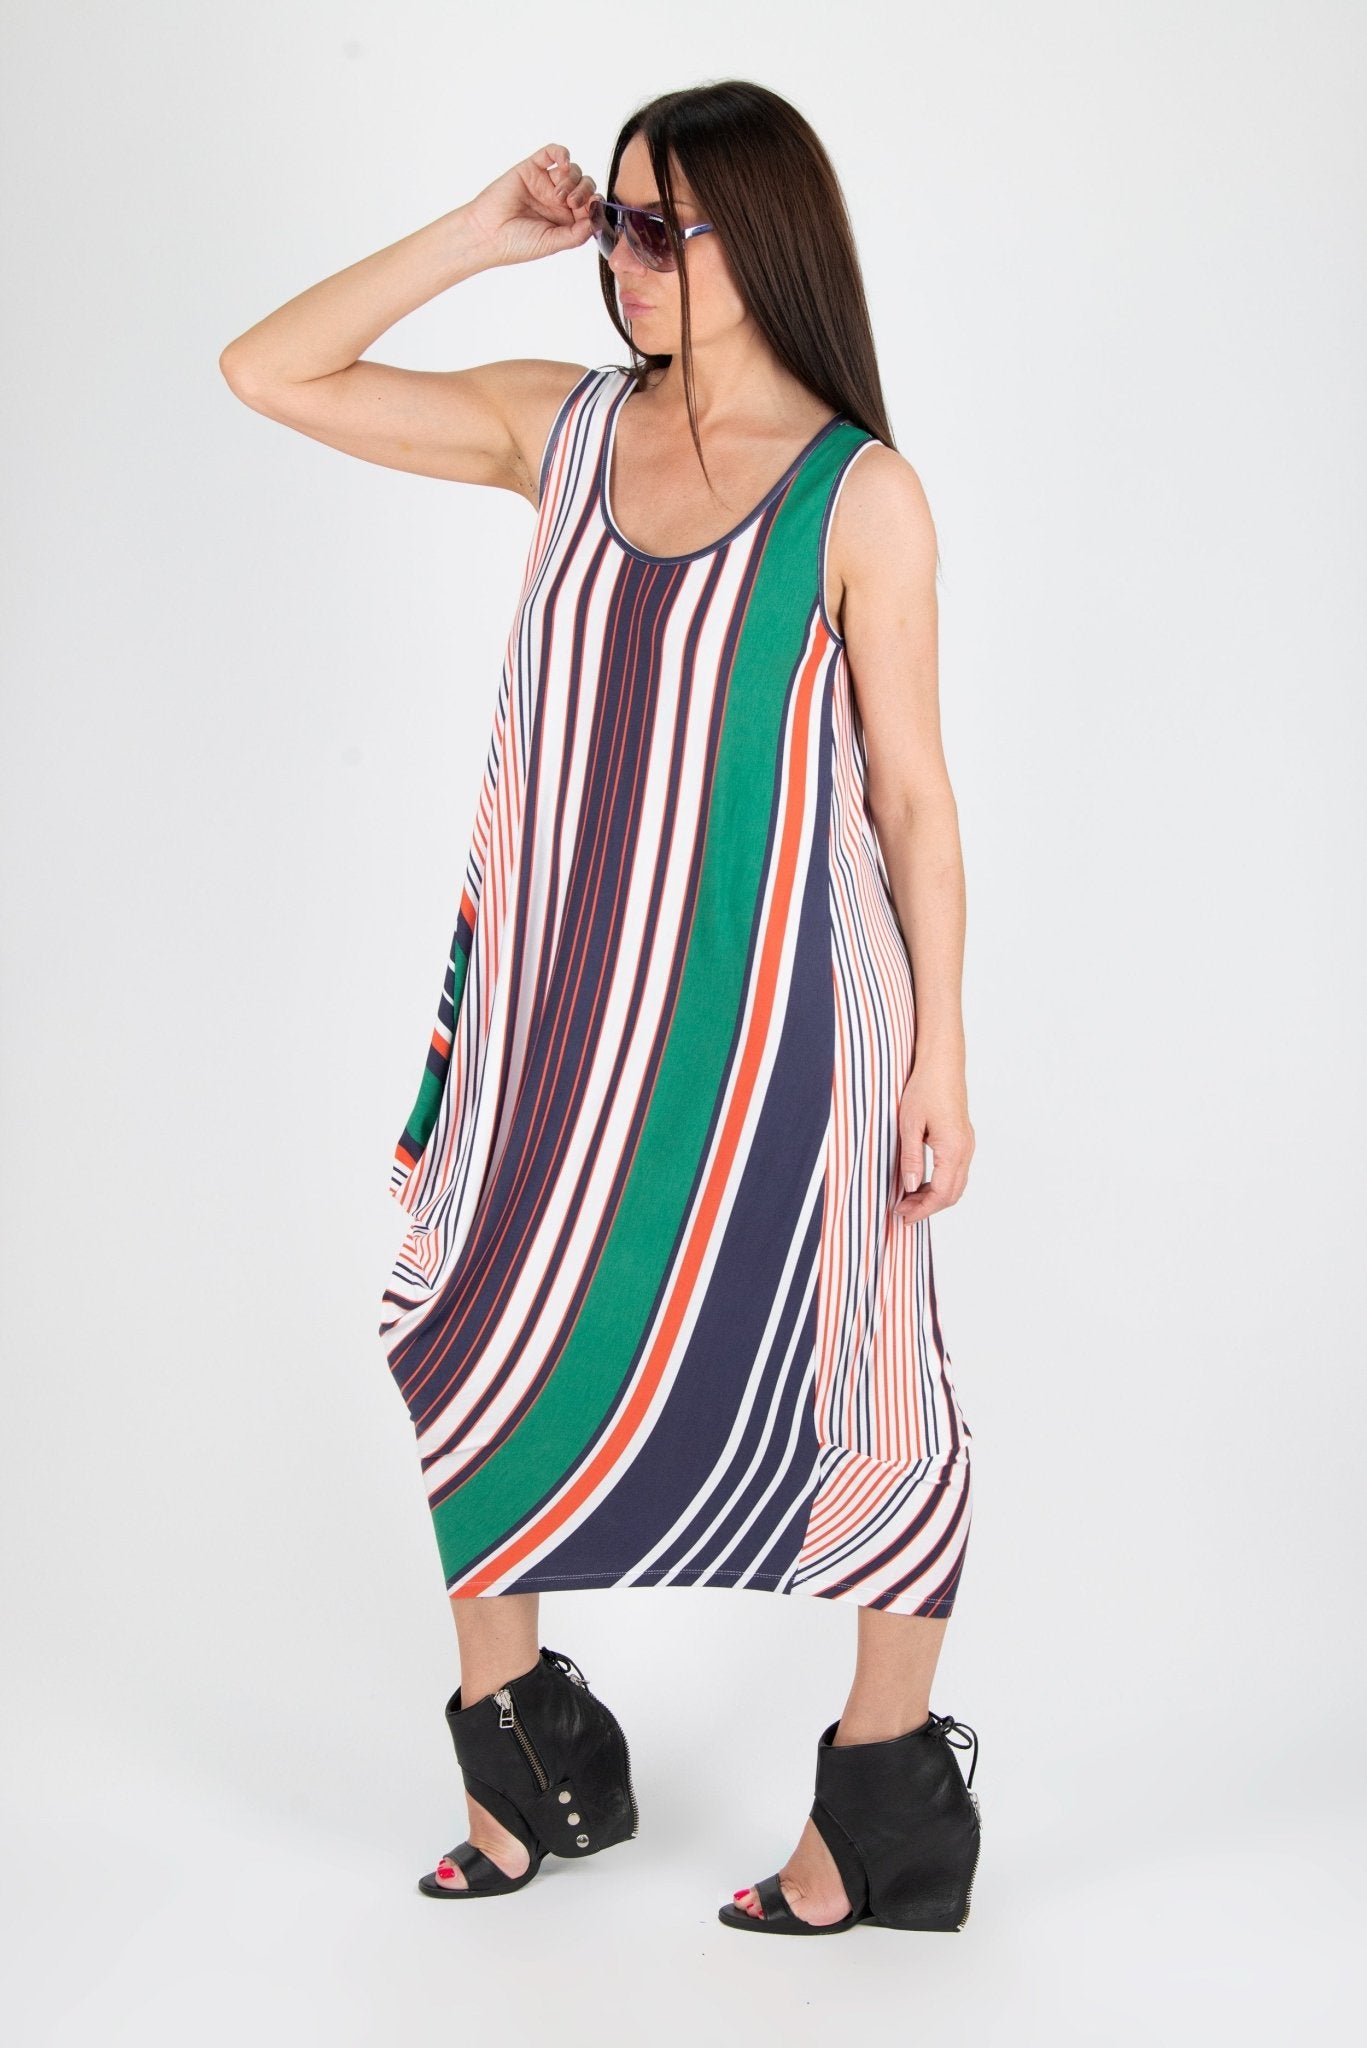 Stripe Dress ONIX SALE - EUG FASHION EugFashion 